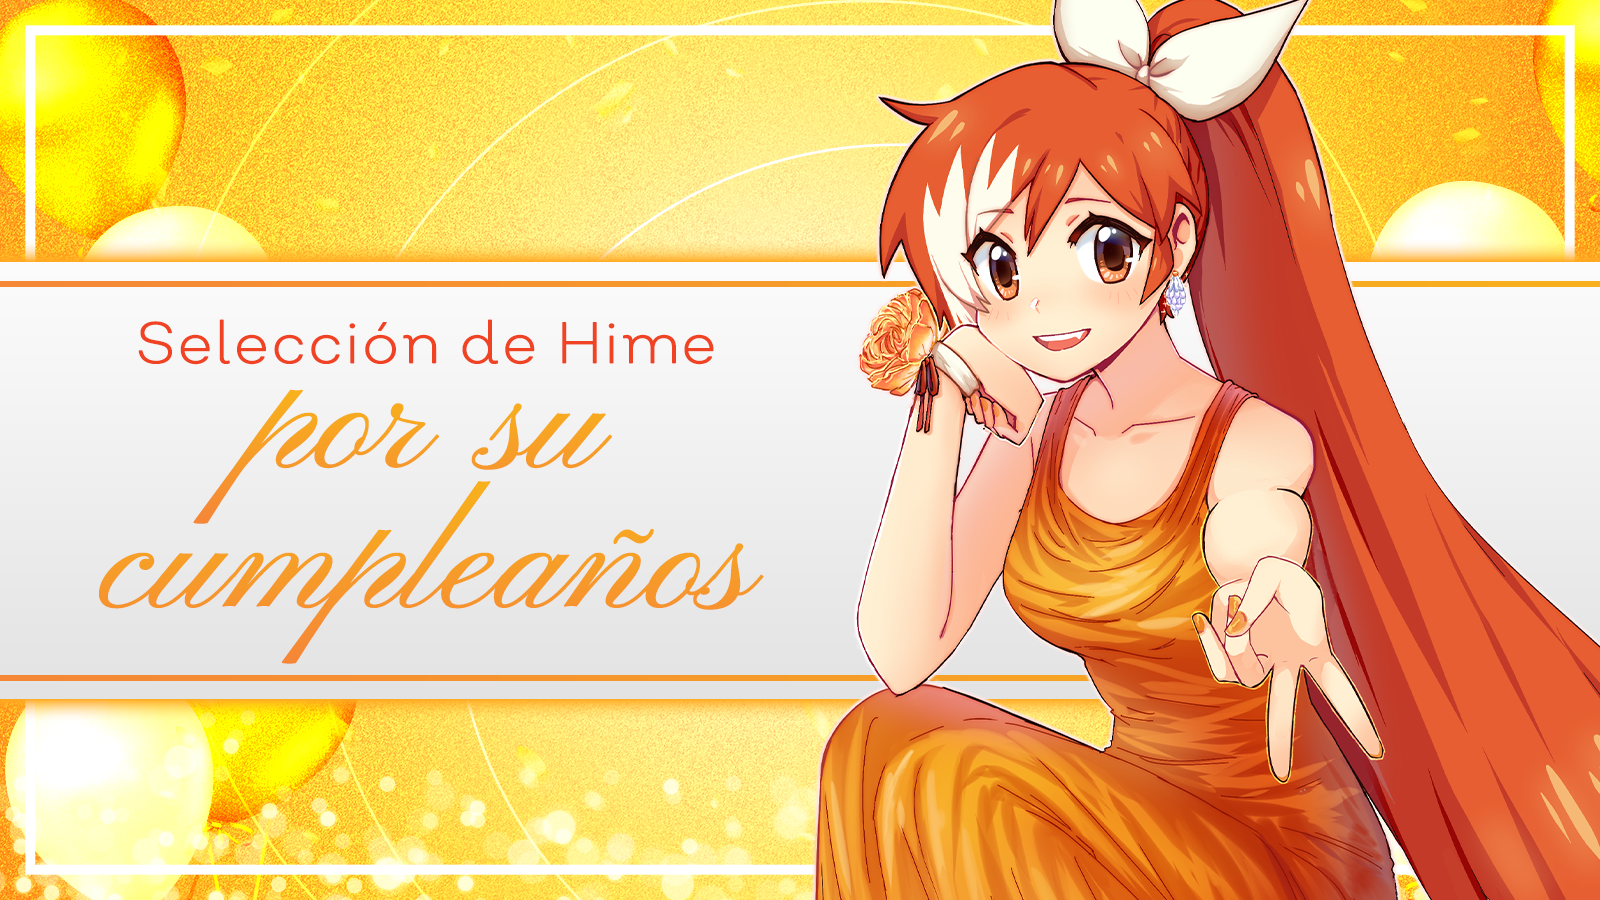 Crunchyroll-Hime in her orange prom dress on her birthday